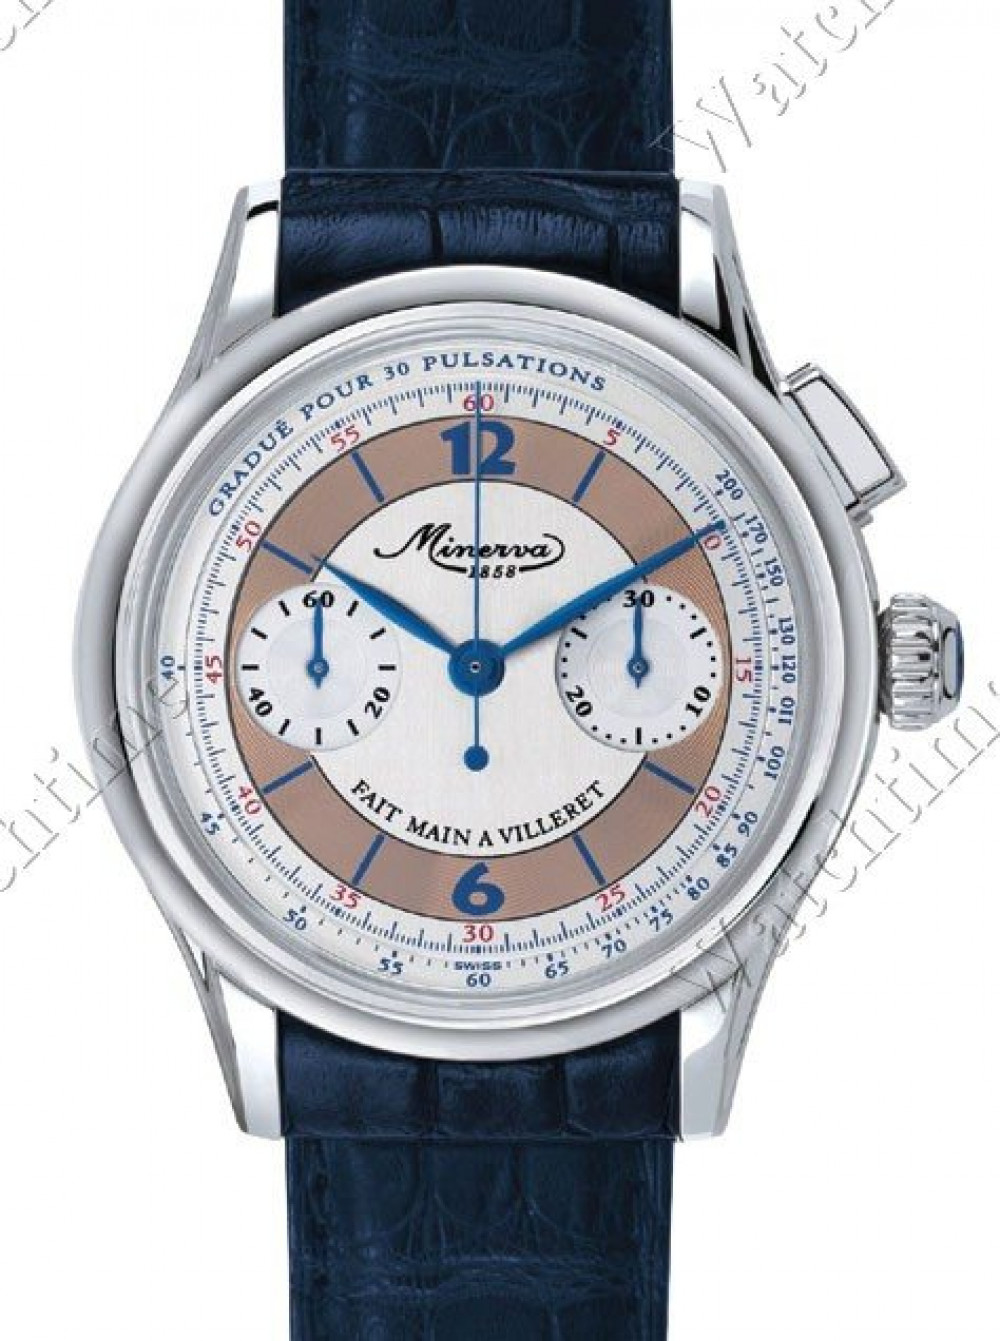 Zegarek firmy Minerva, model Collection Authentique